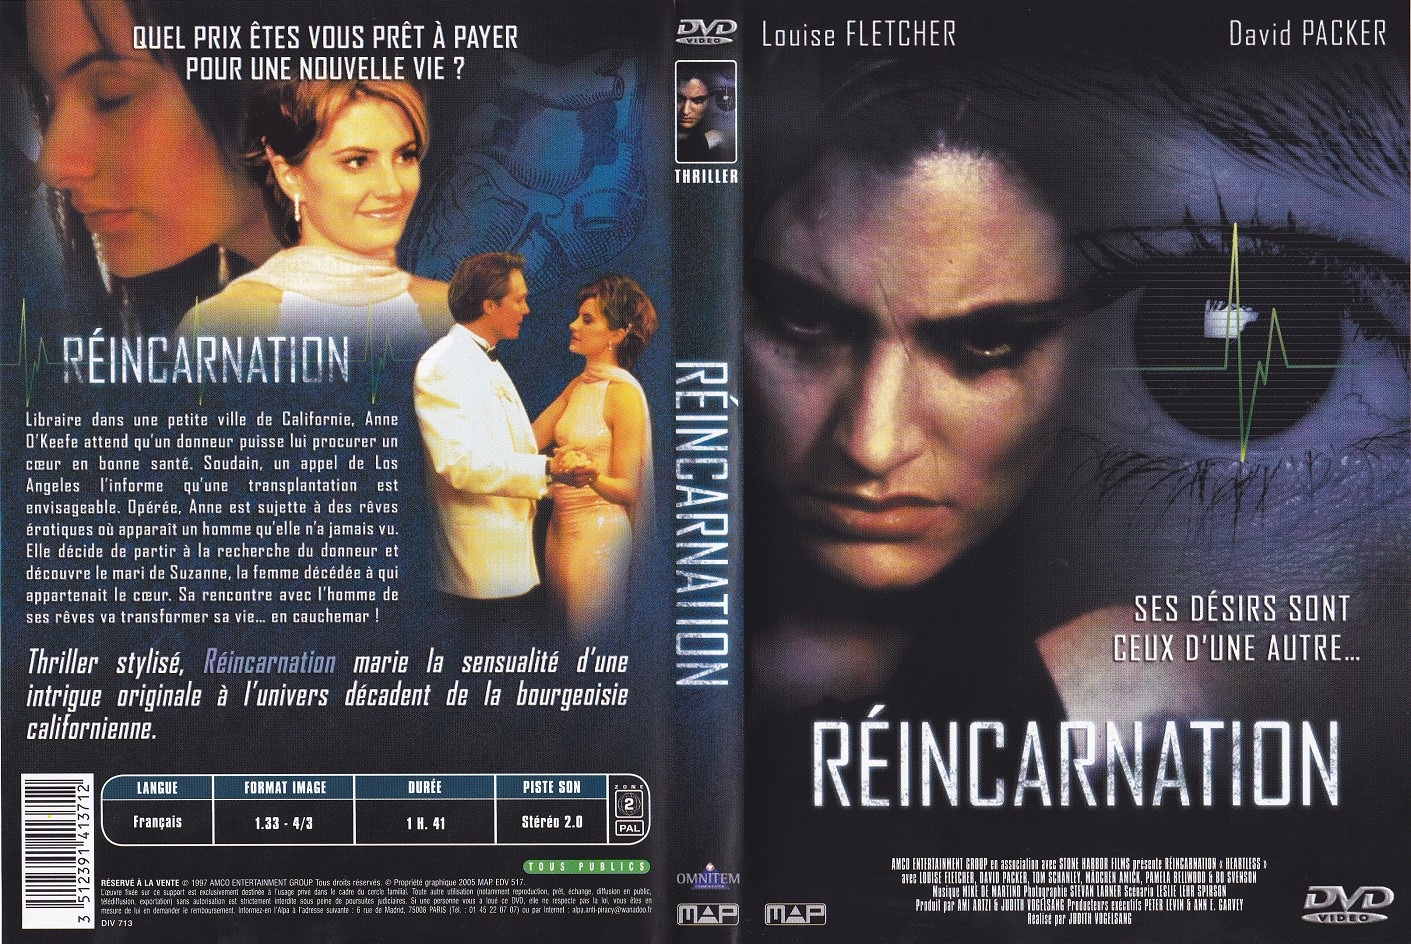 Jaquette DVD Rincarnation